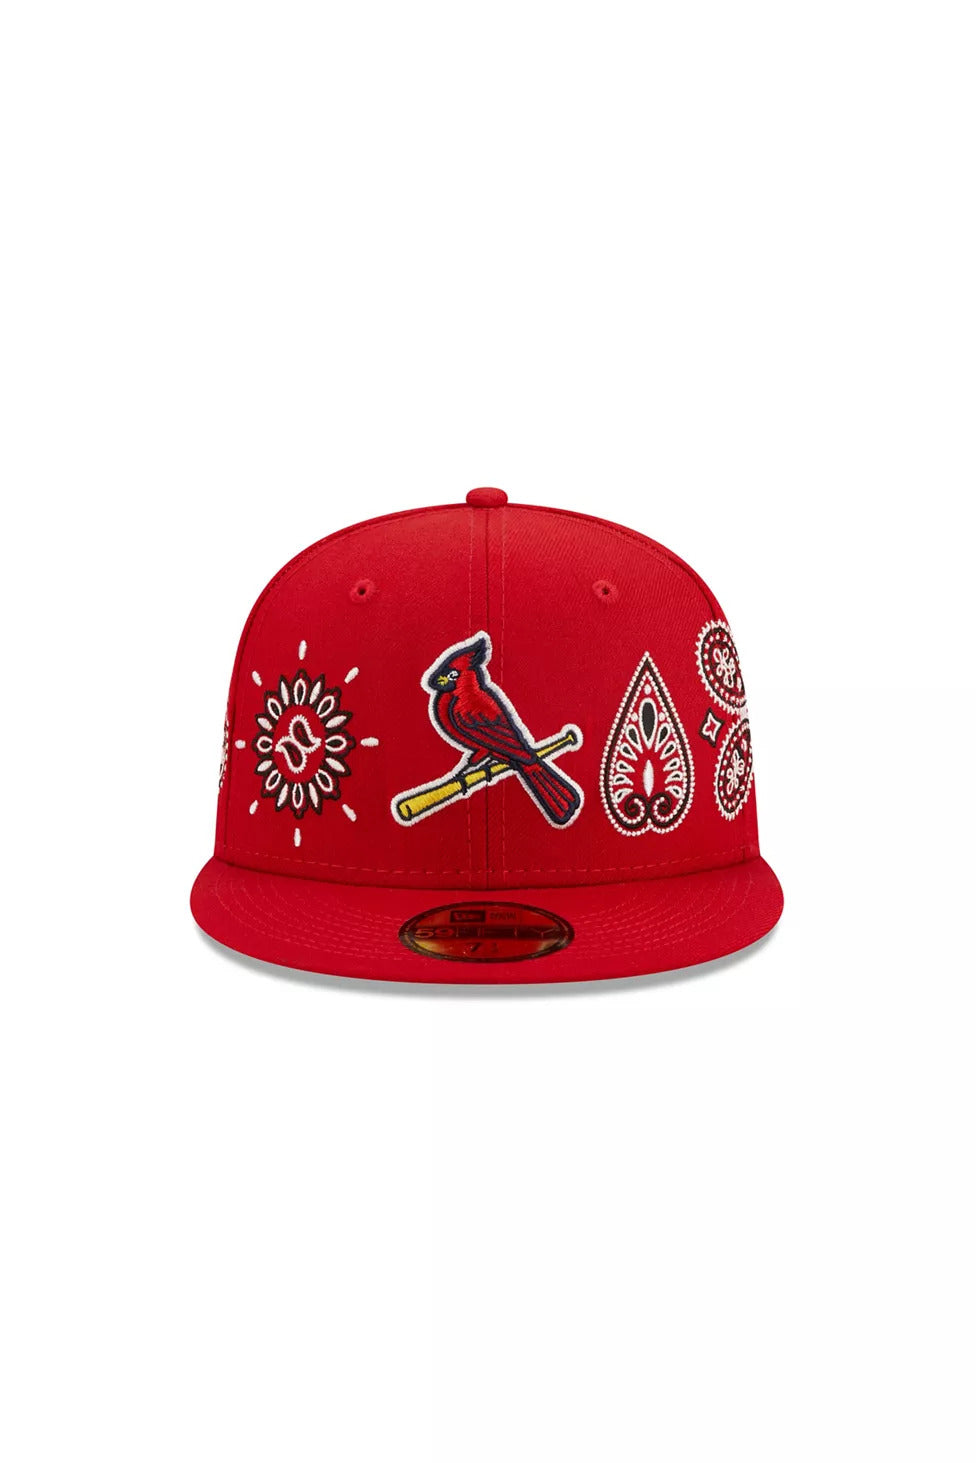 New Era St Louis Cardinals Men Hat (Red Scarlet Gold)